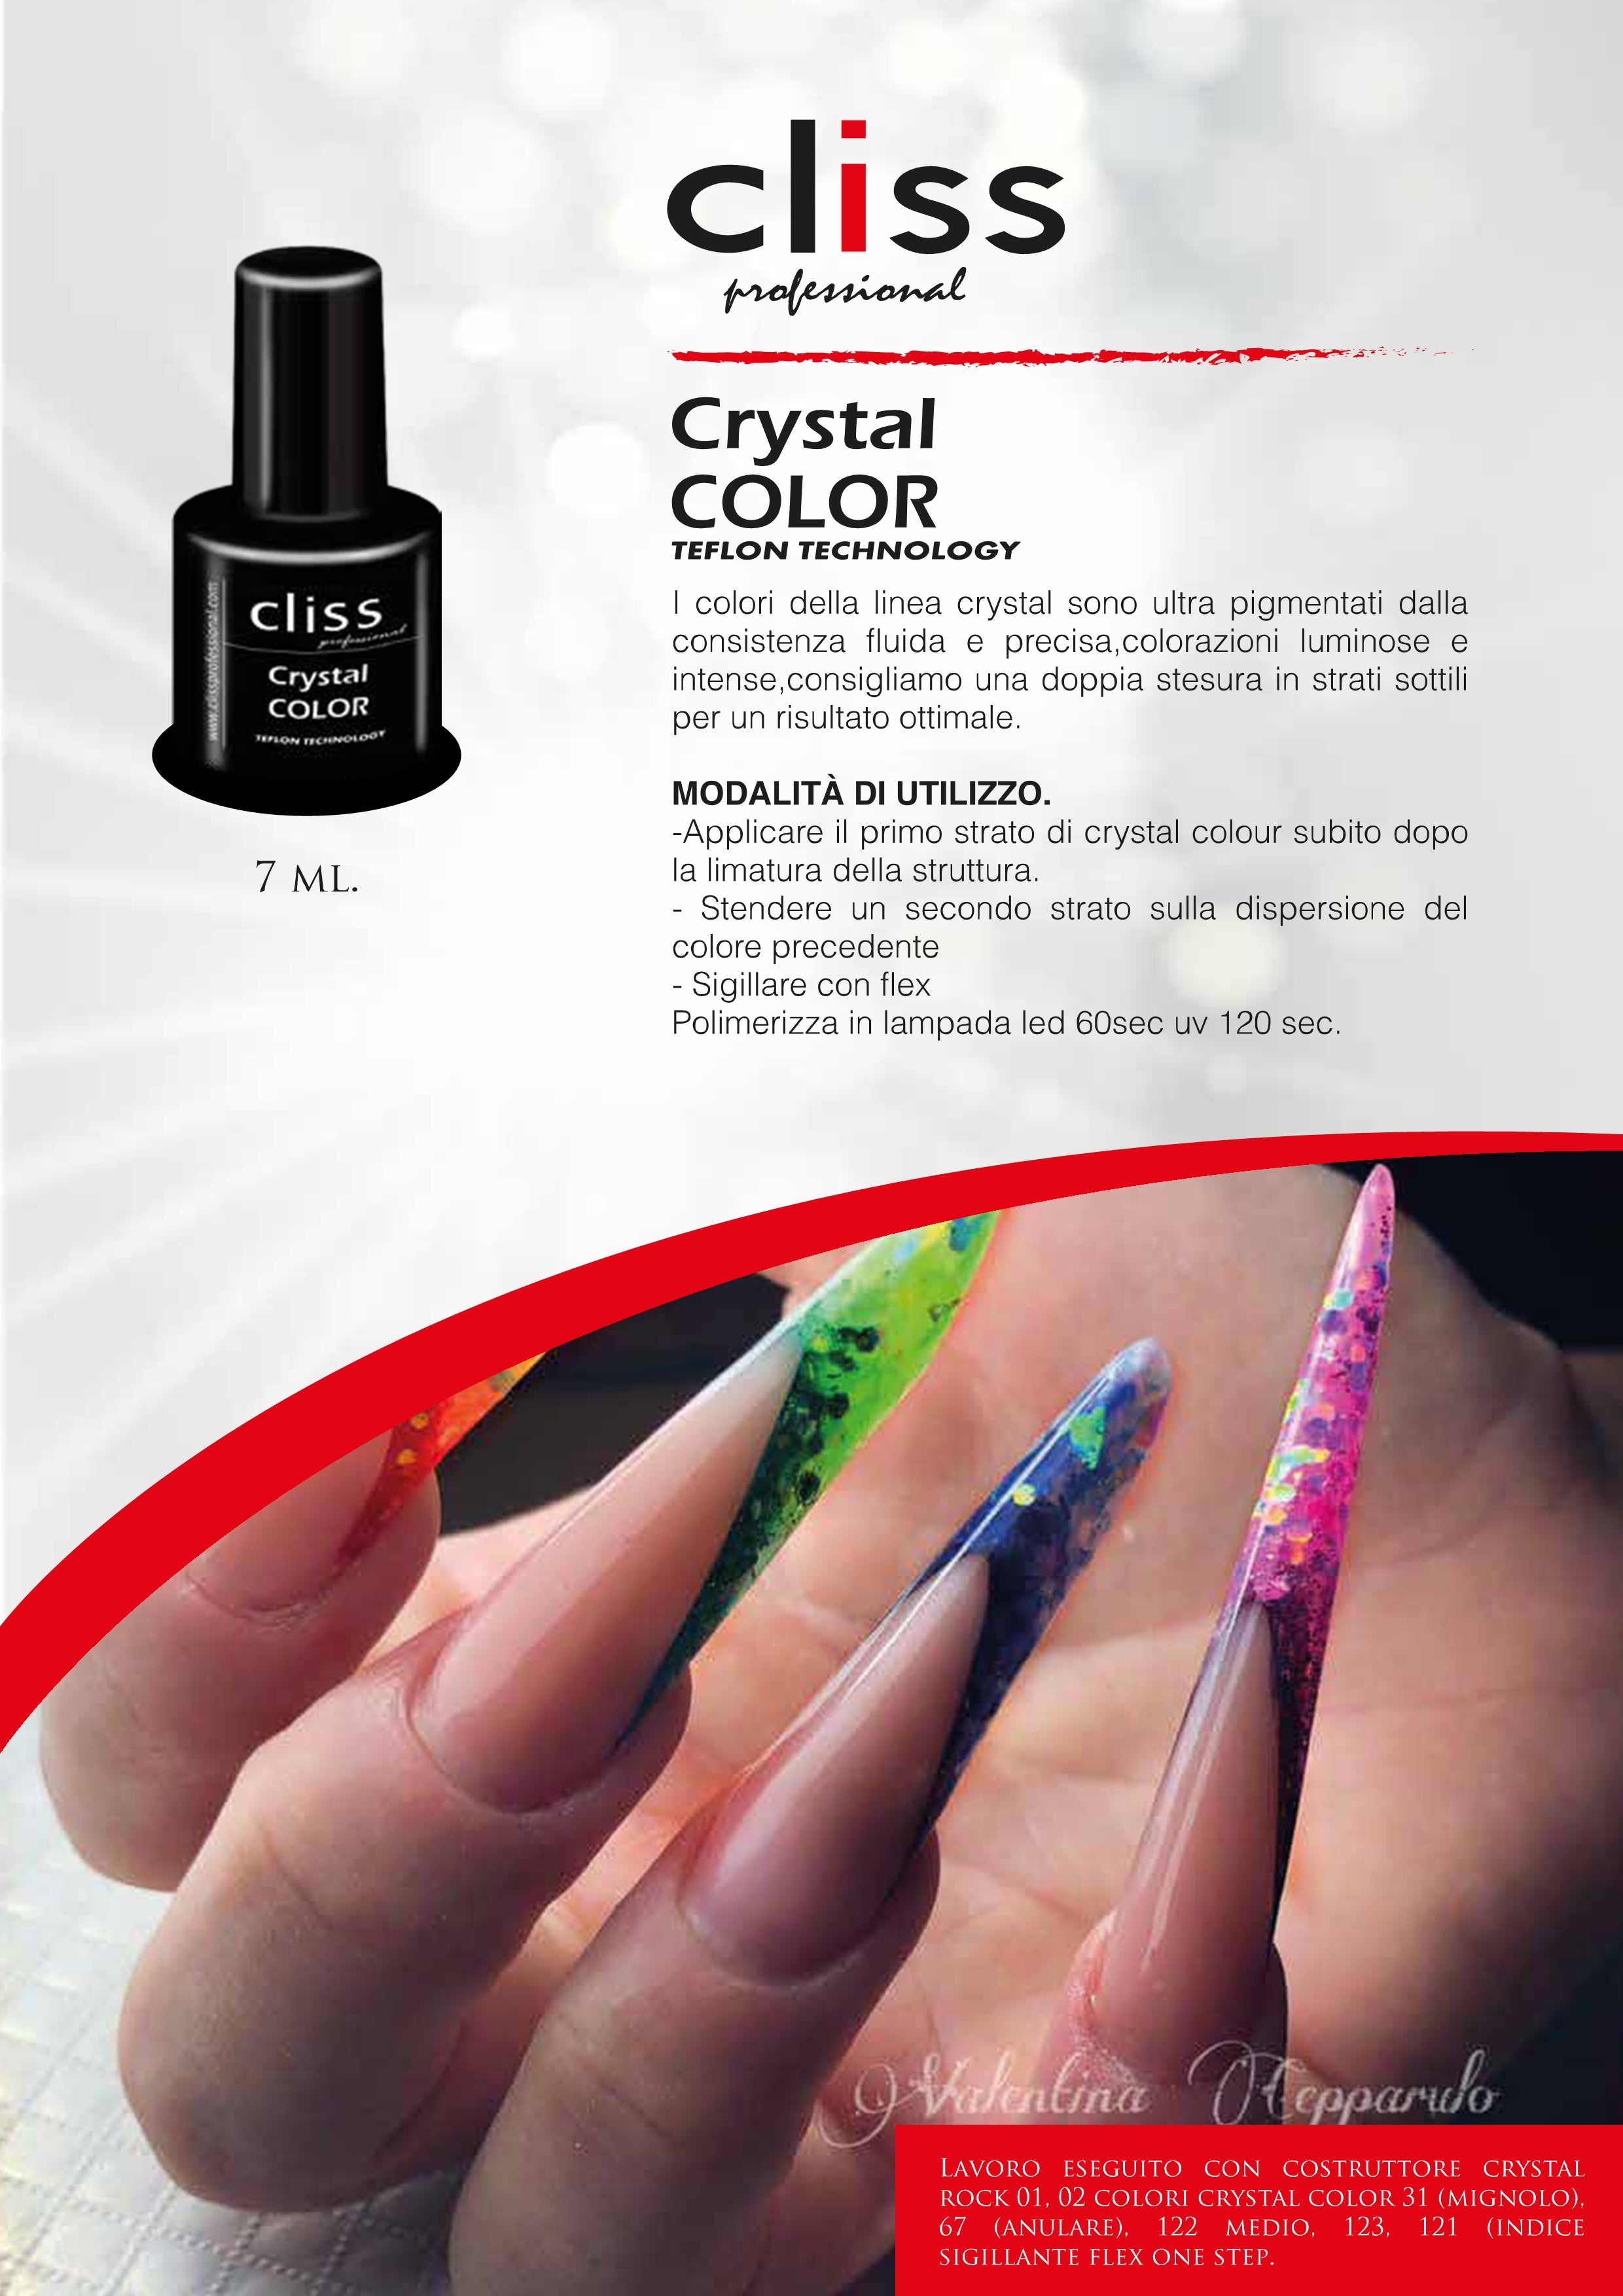 Cliss Smalto Crystal Color 7 ml 035